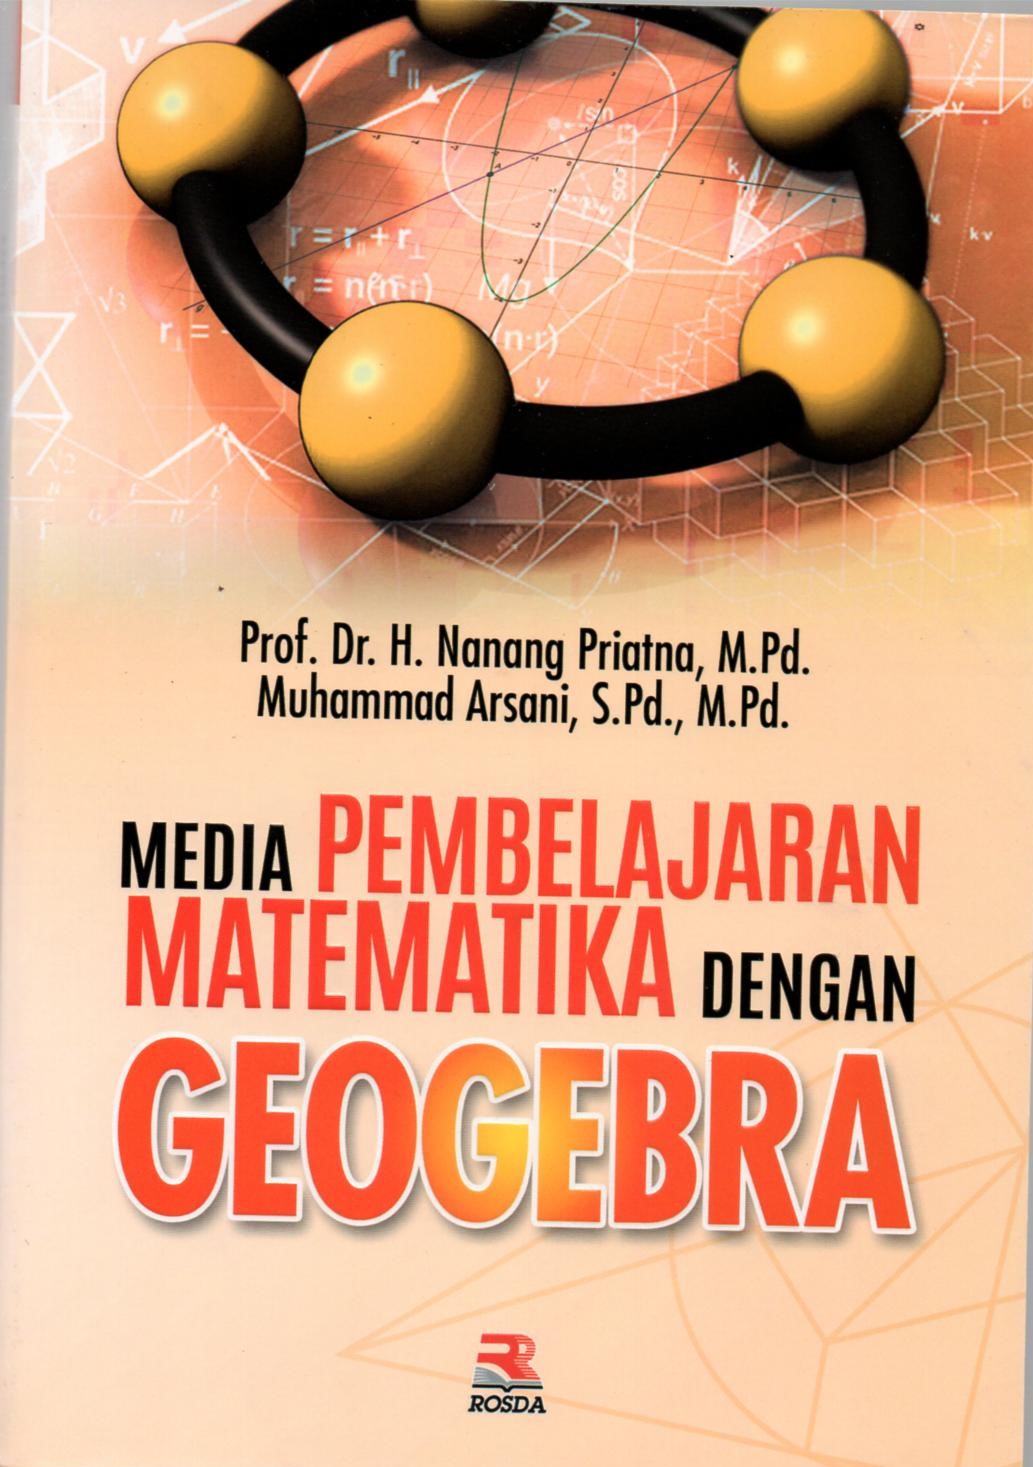 Media pembelajaran matematika dengan geogebra